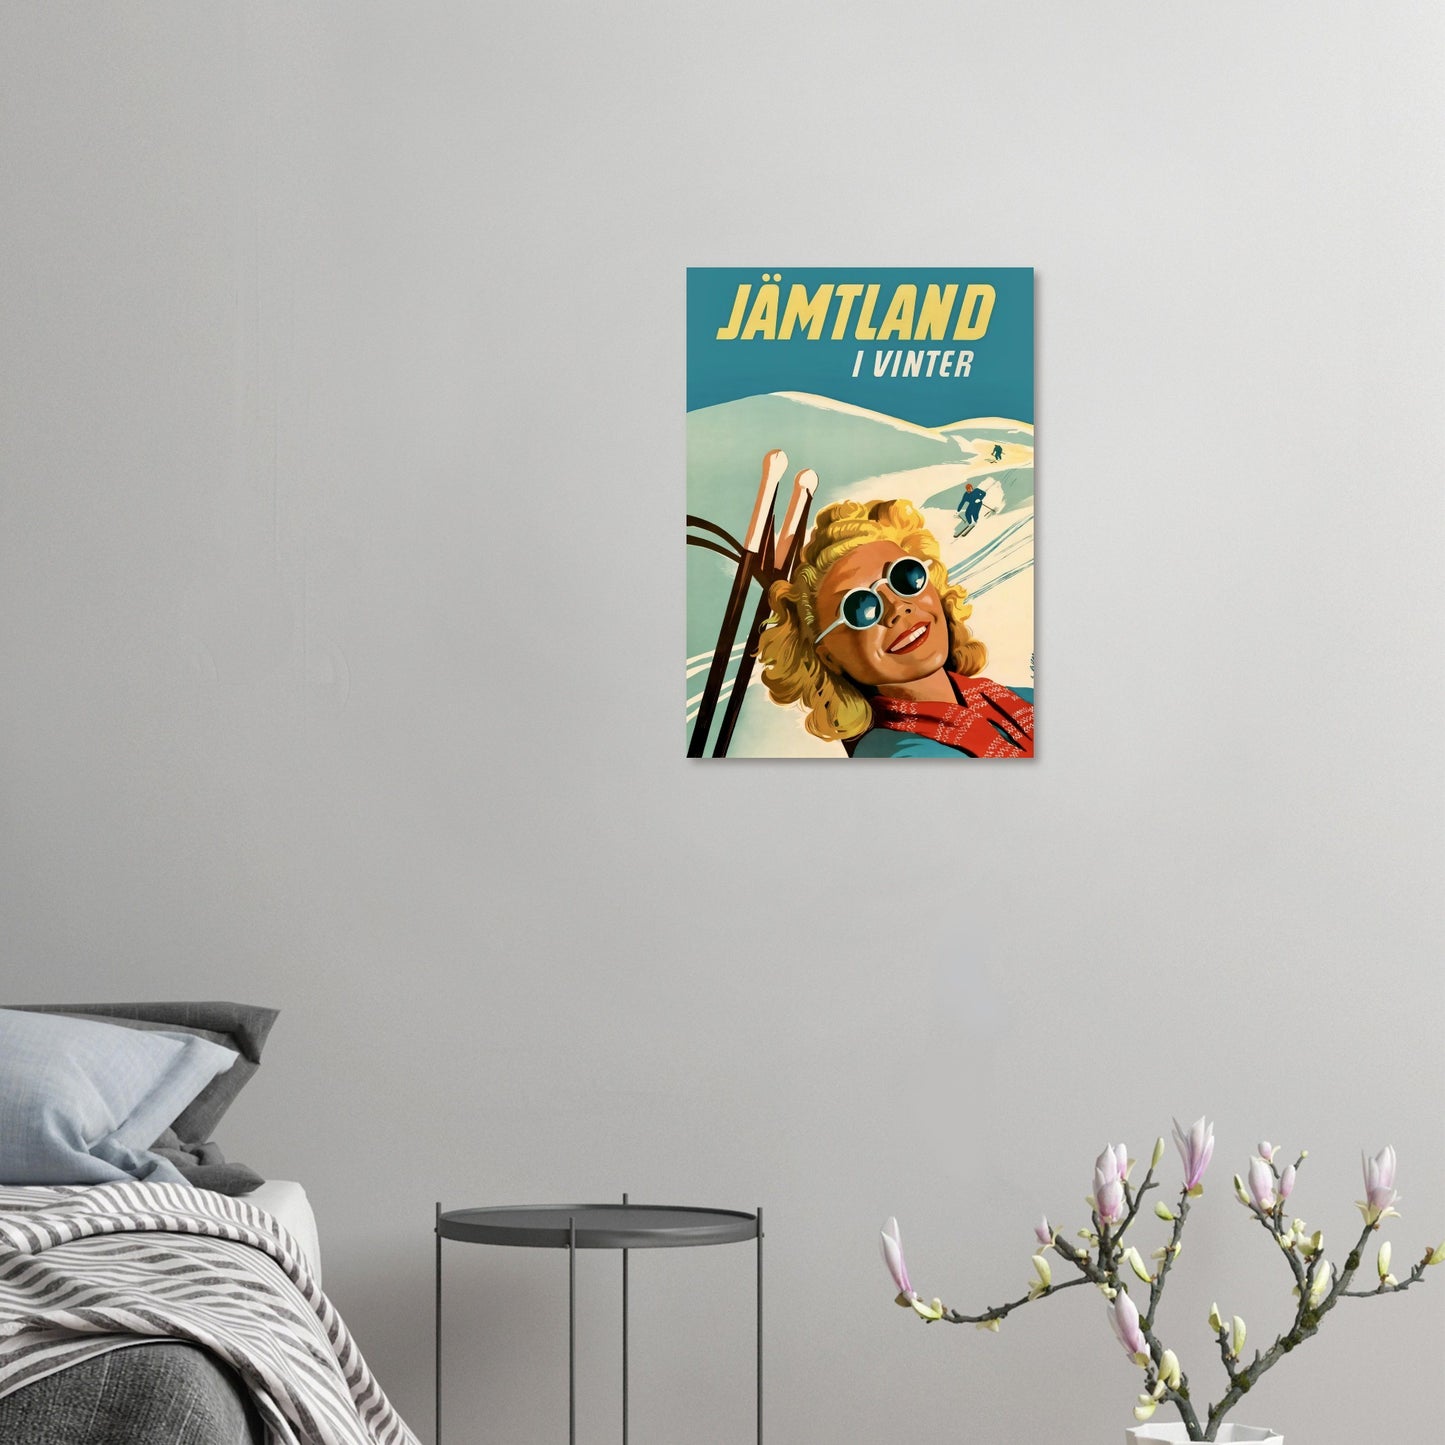 Jämtland in the Winter Vintage Poster Reprint on Premium Matte Paper - Posterify